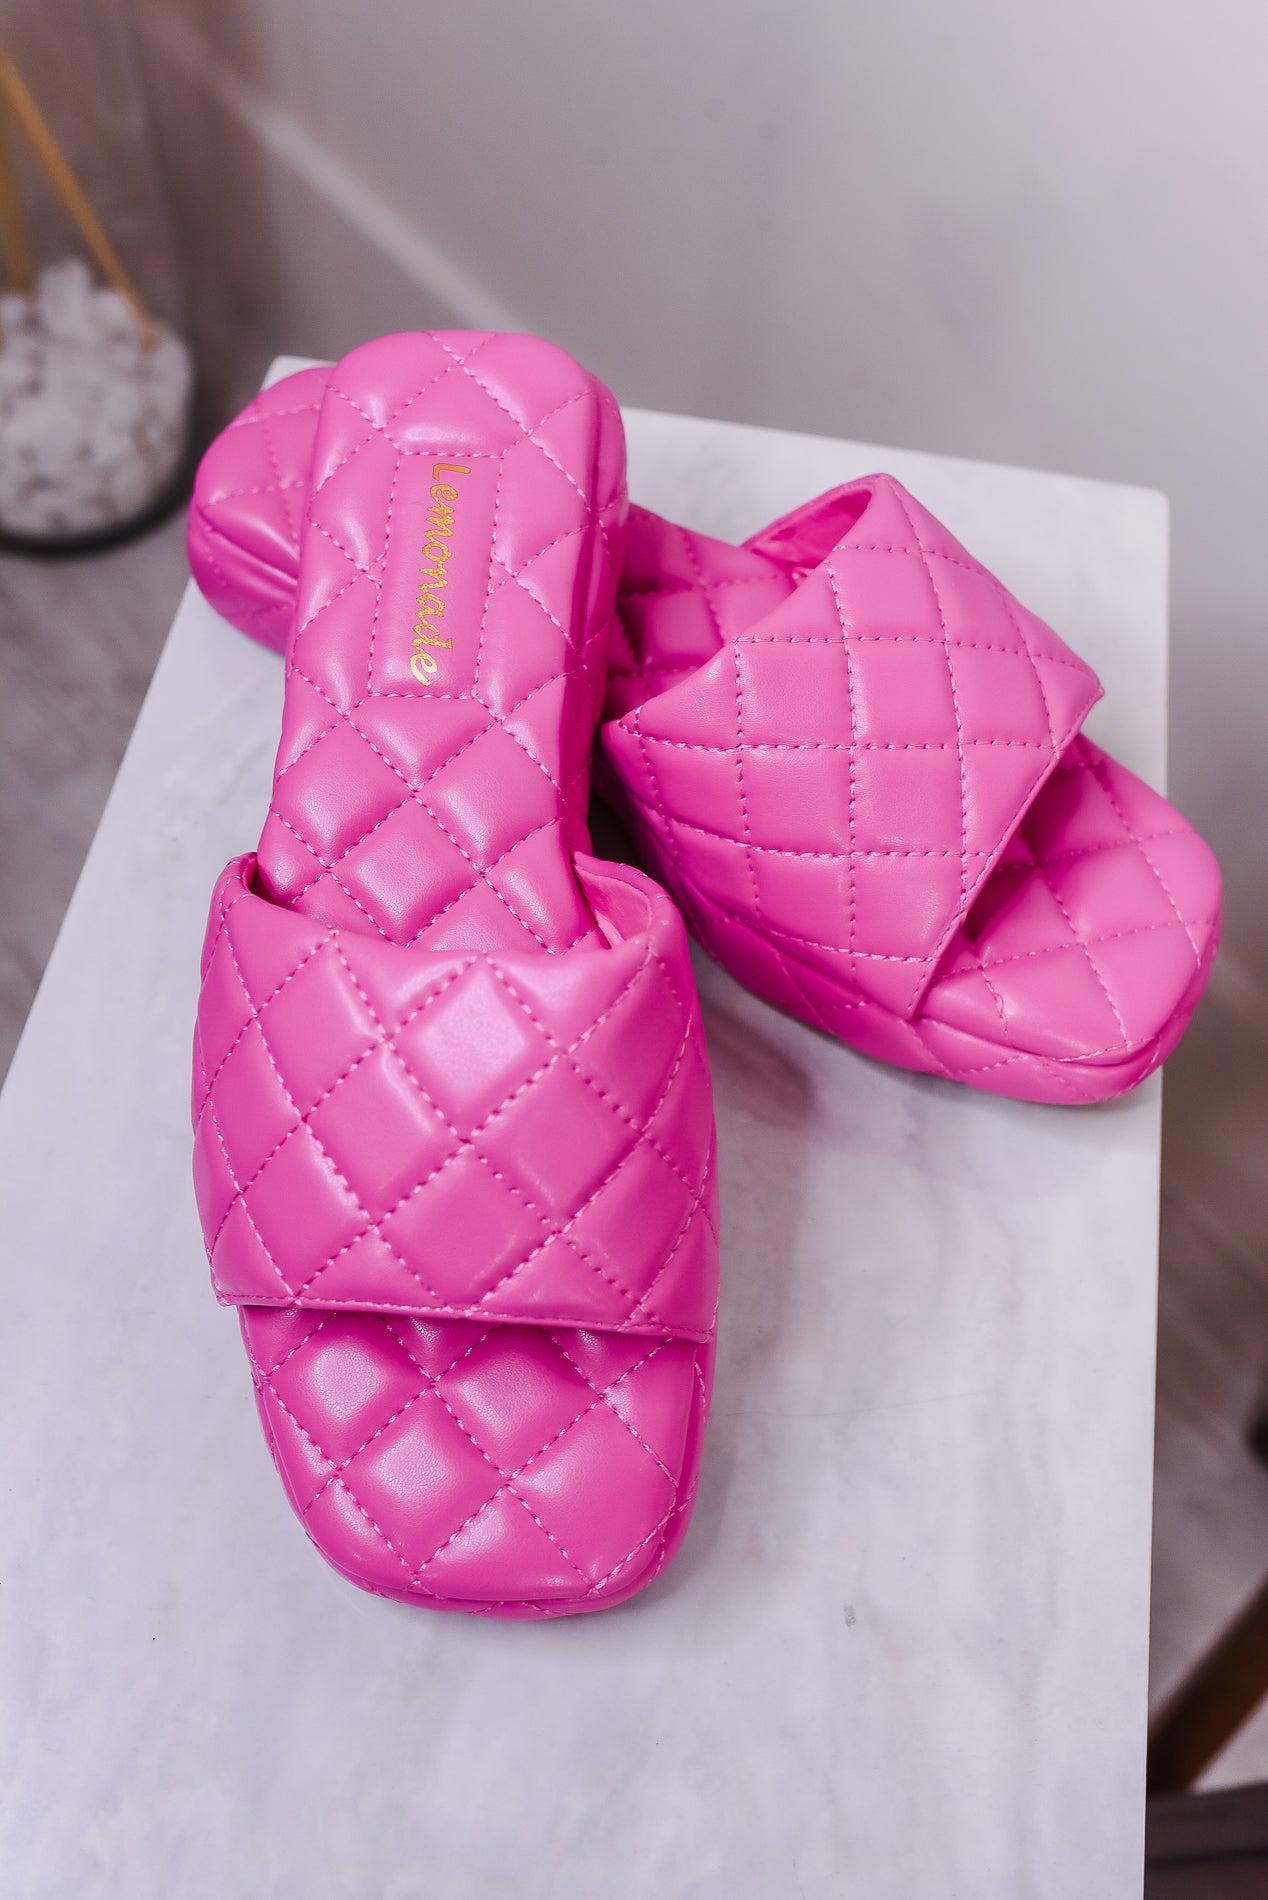 Summer Socialite Pink Quilted Slip On Sandals - SHO2278PK